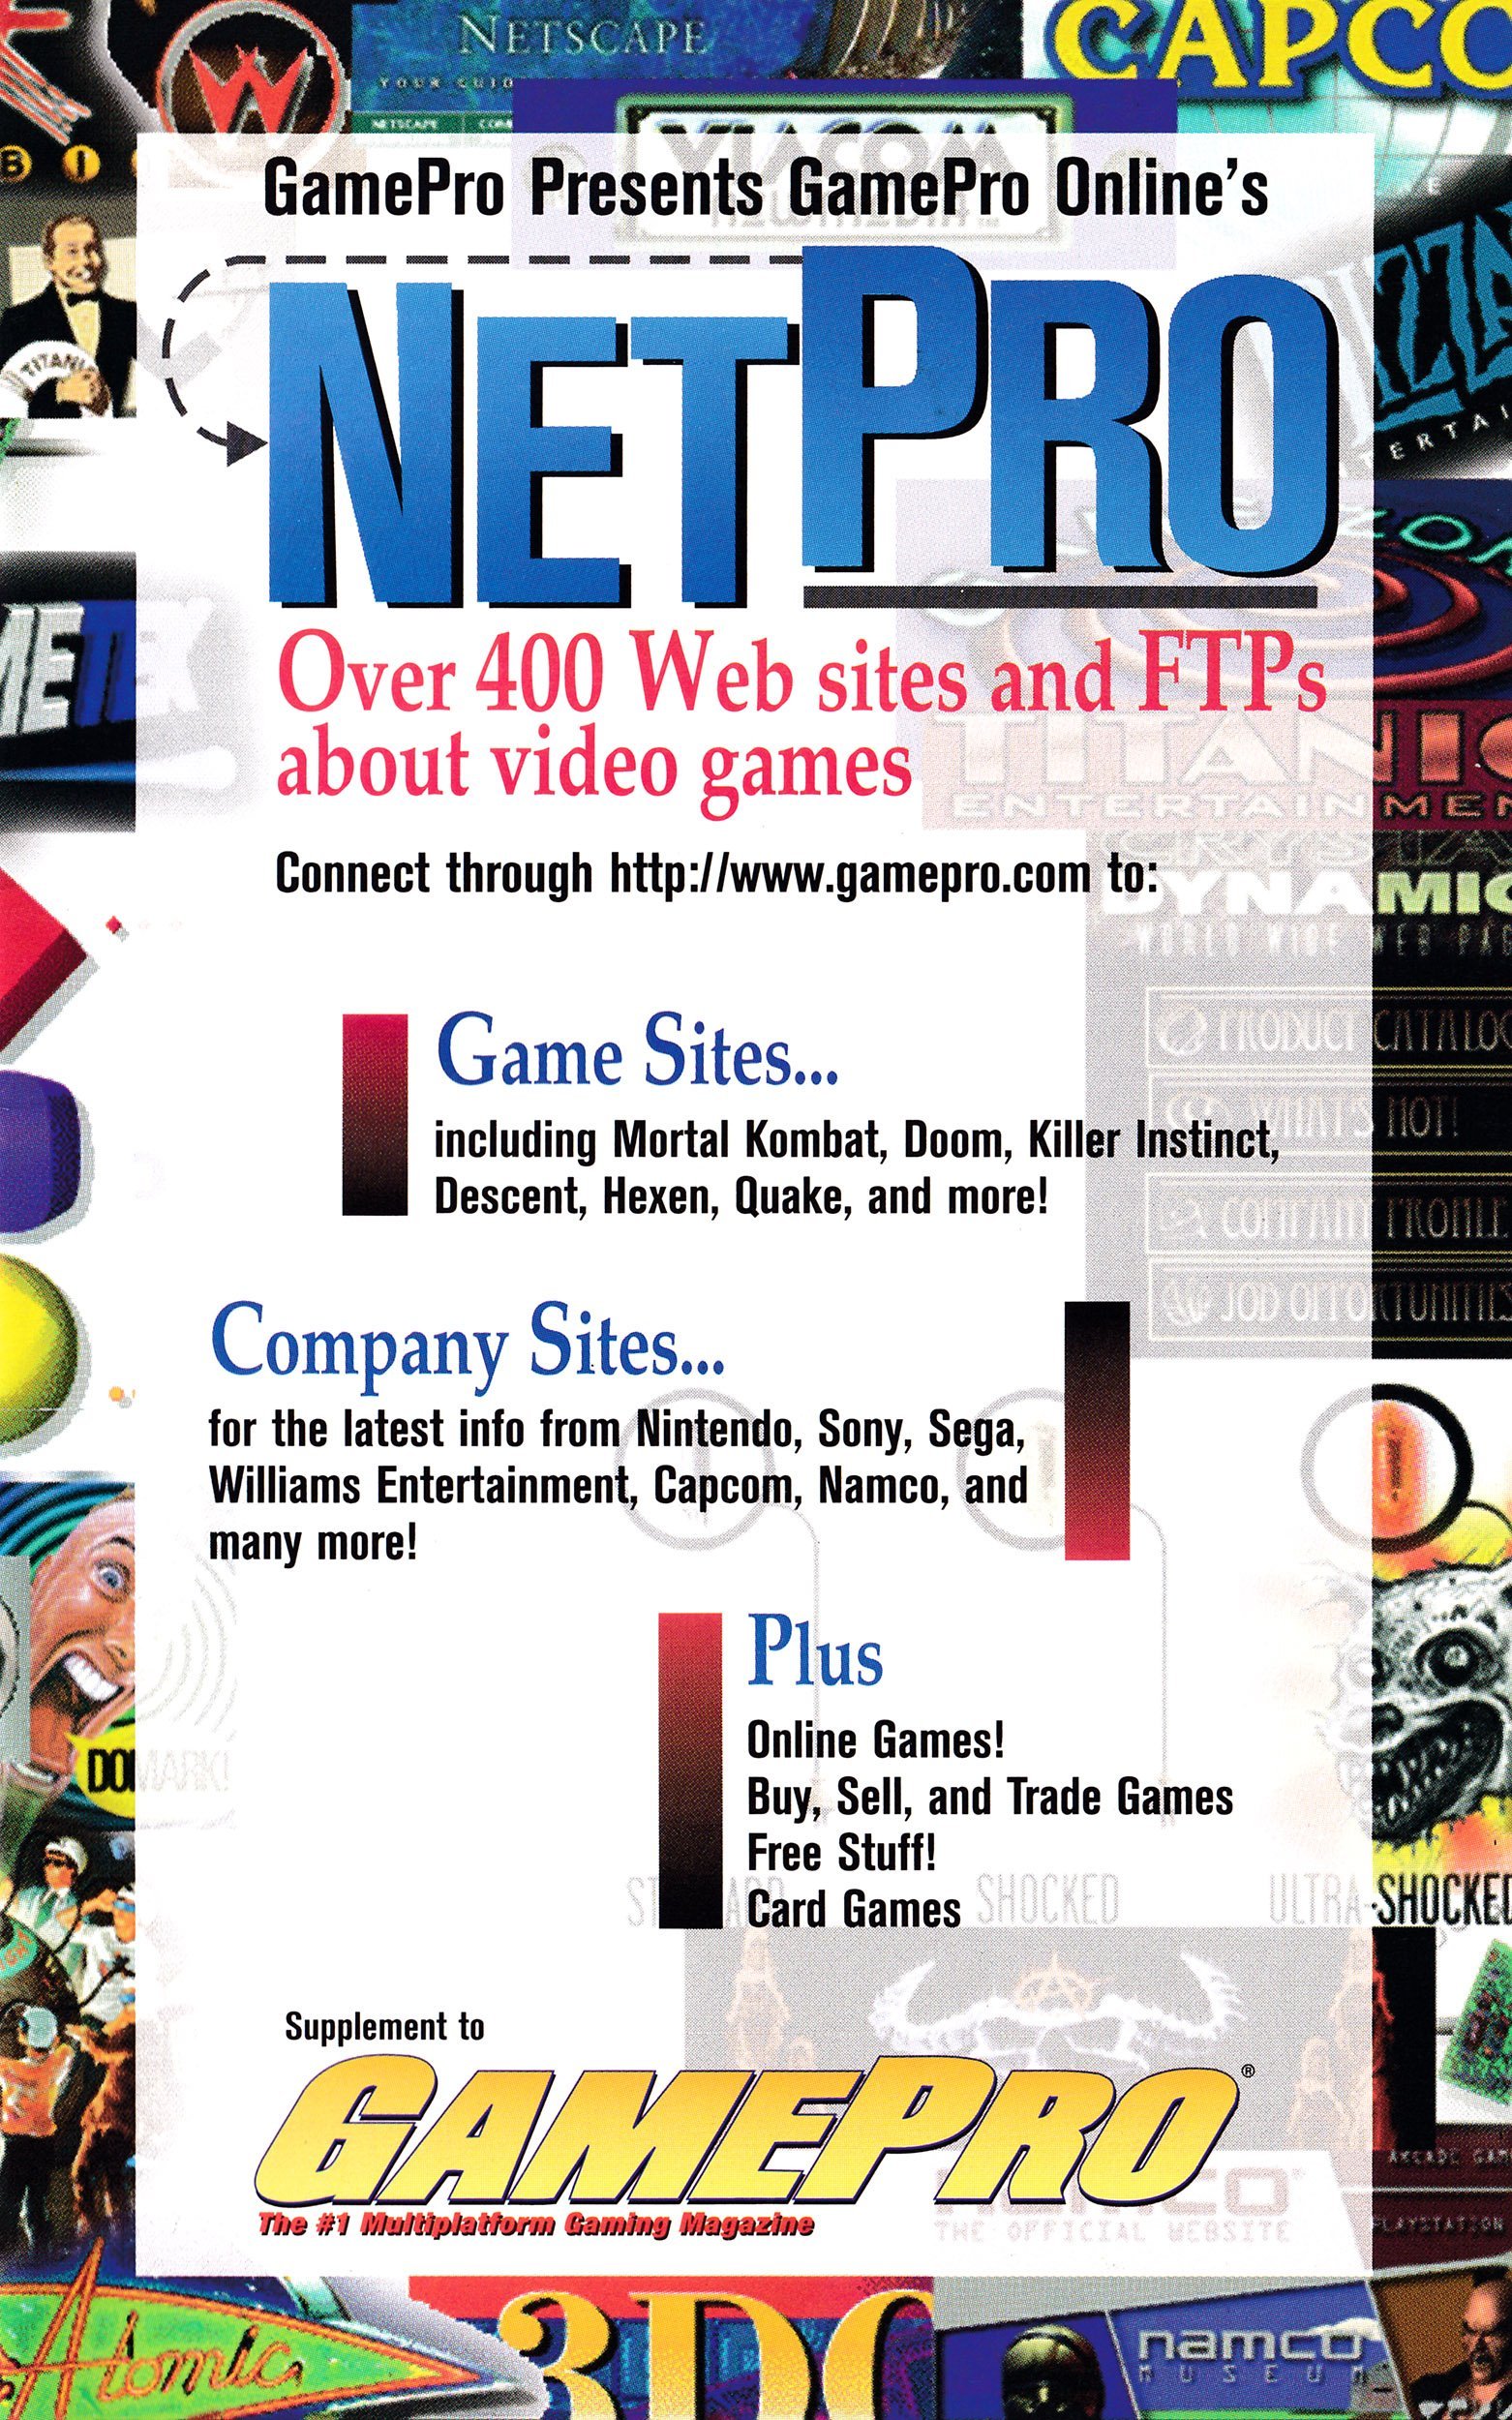 GamePro Issue 086 September 1996 Supplement 1 (GamePro Presents GamePro Online's NetPro)